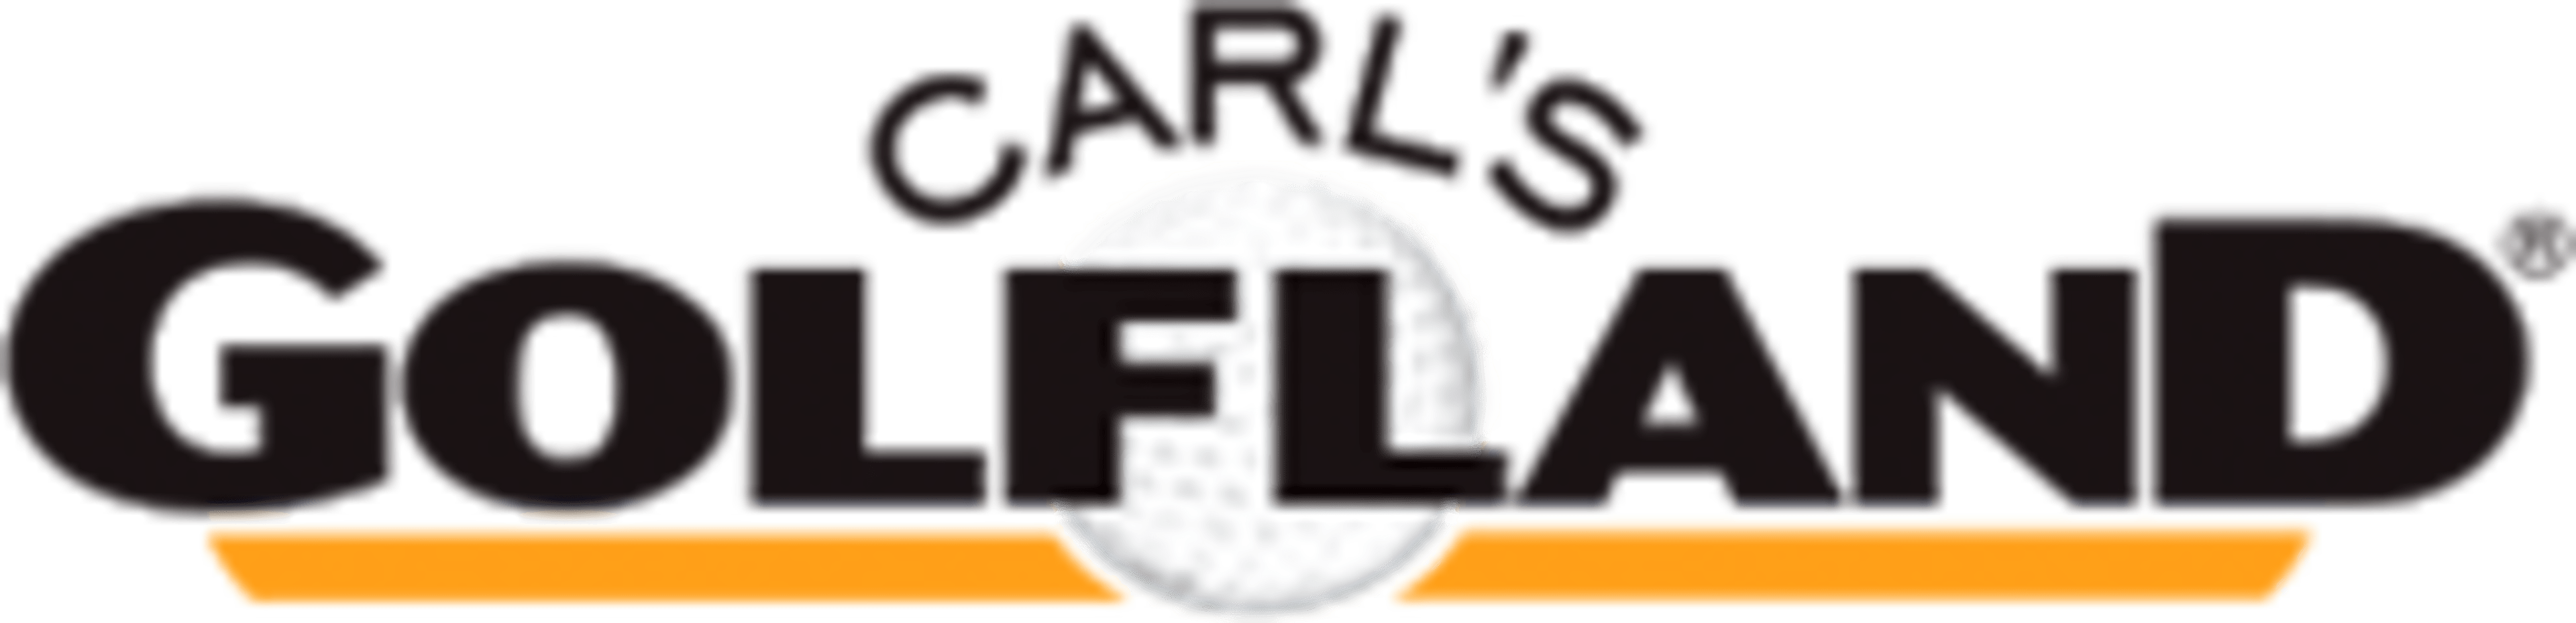 Carl's GolflandCode